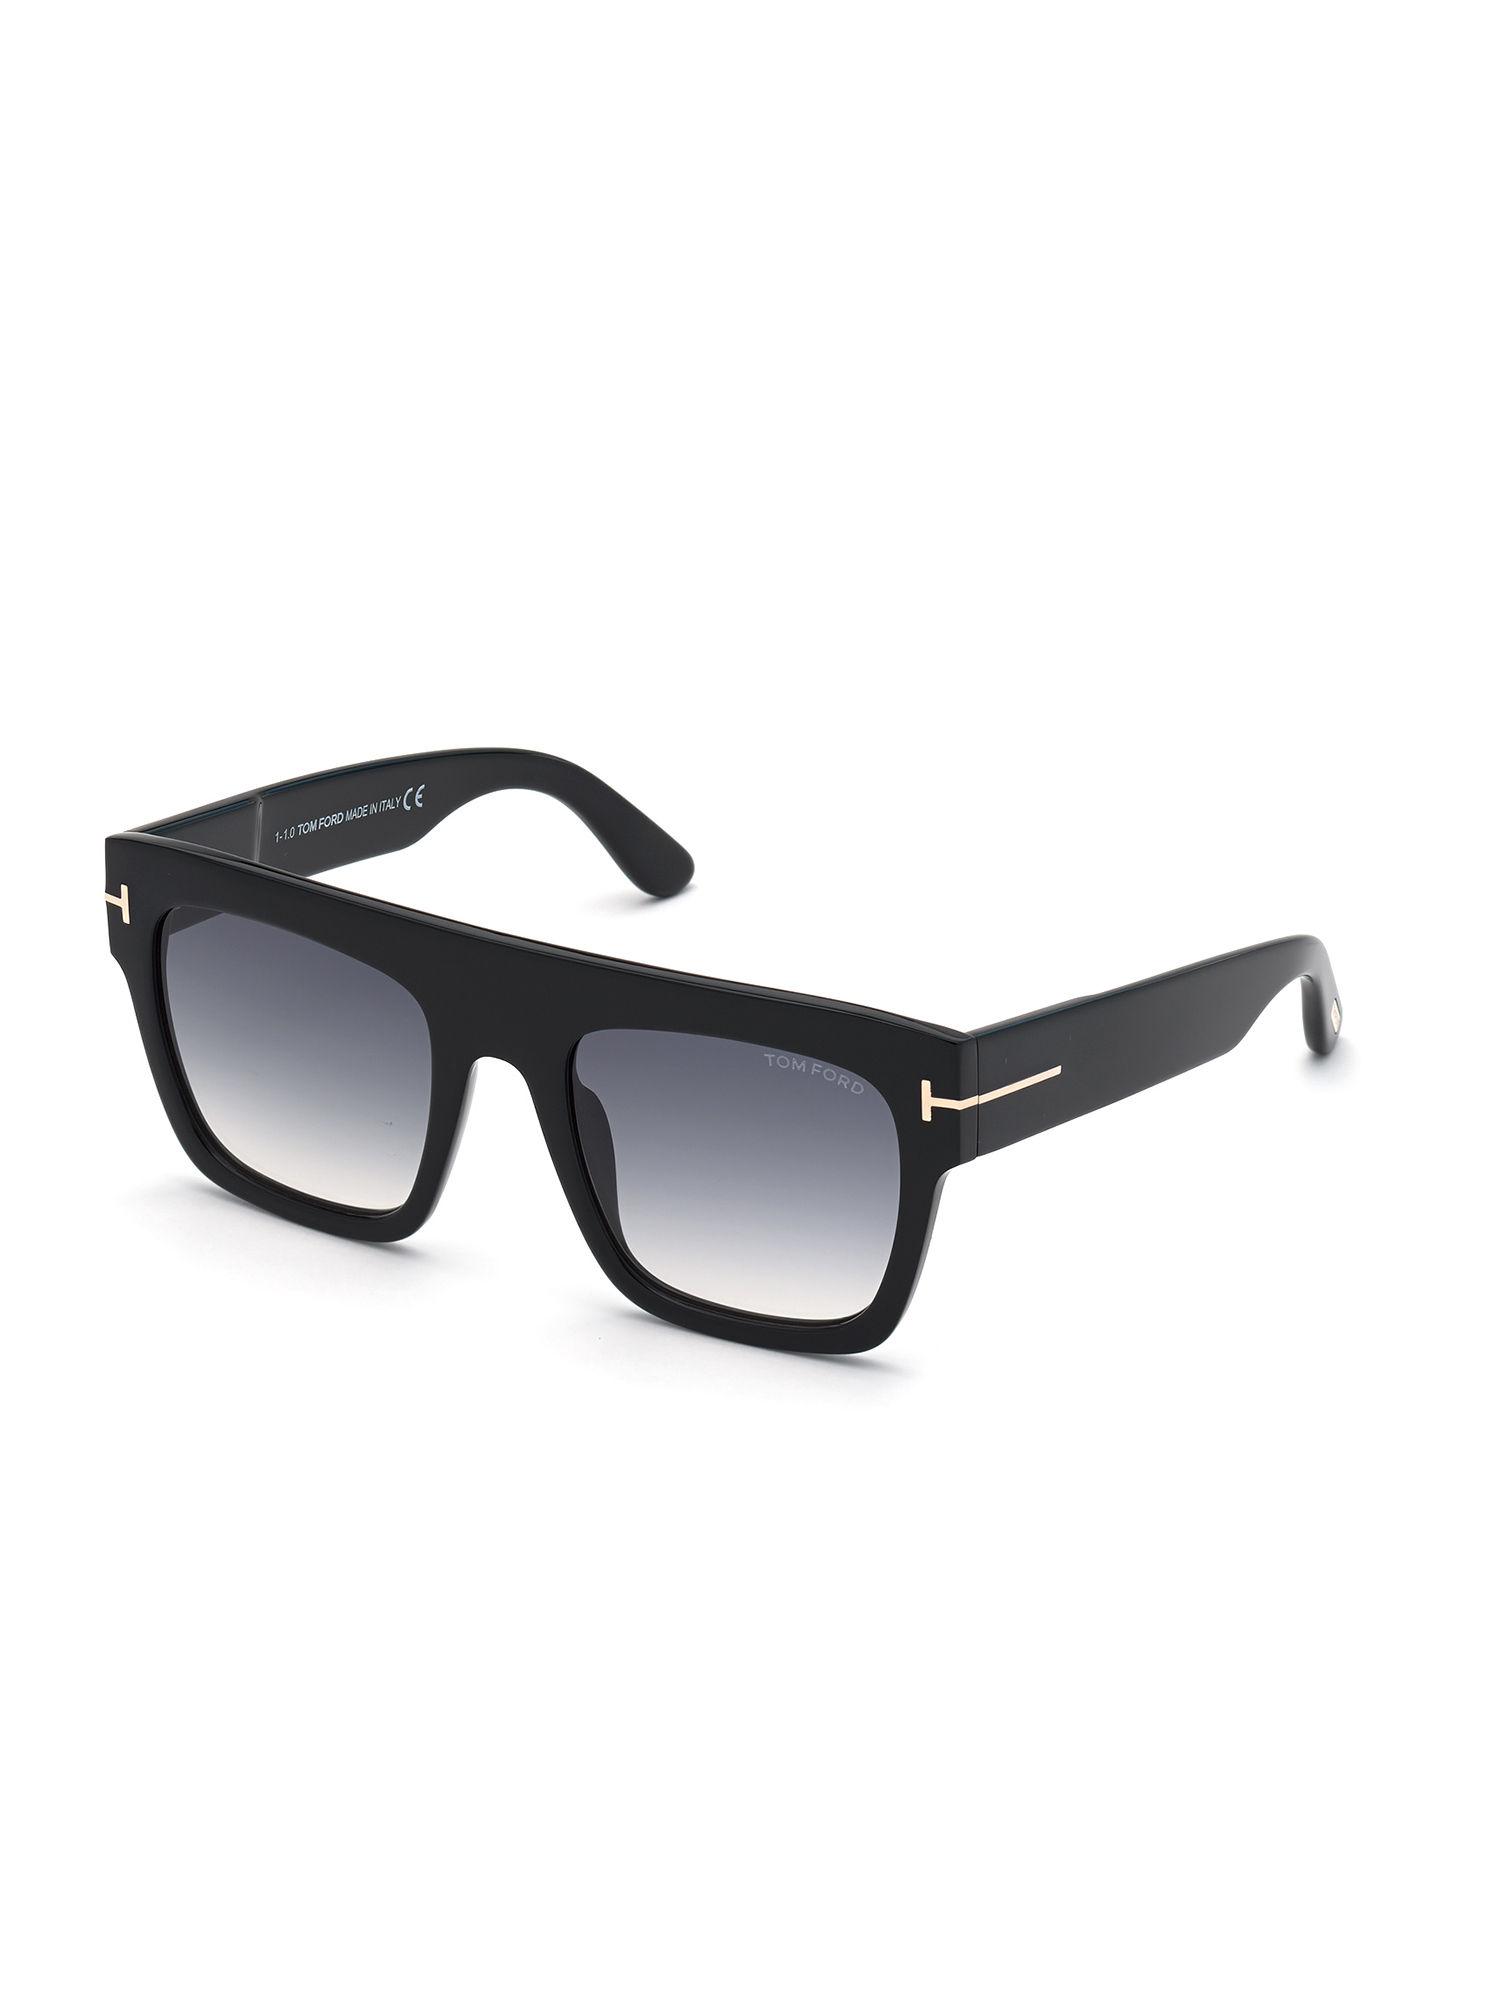 black-plastic-sunglasses-ft0847-52-01b